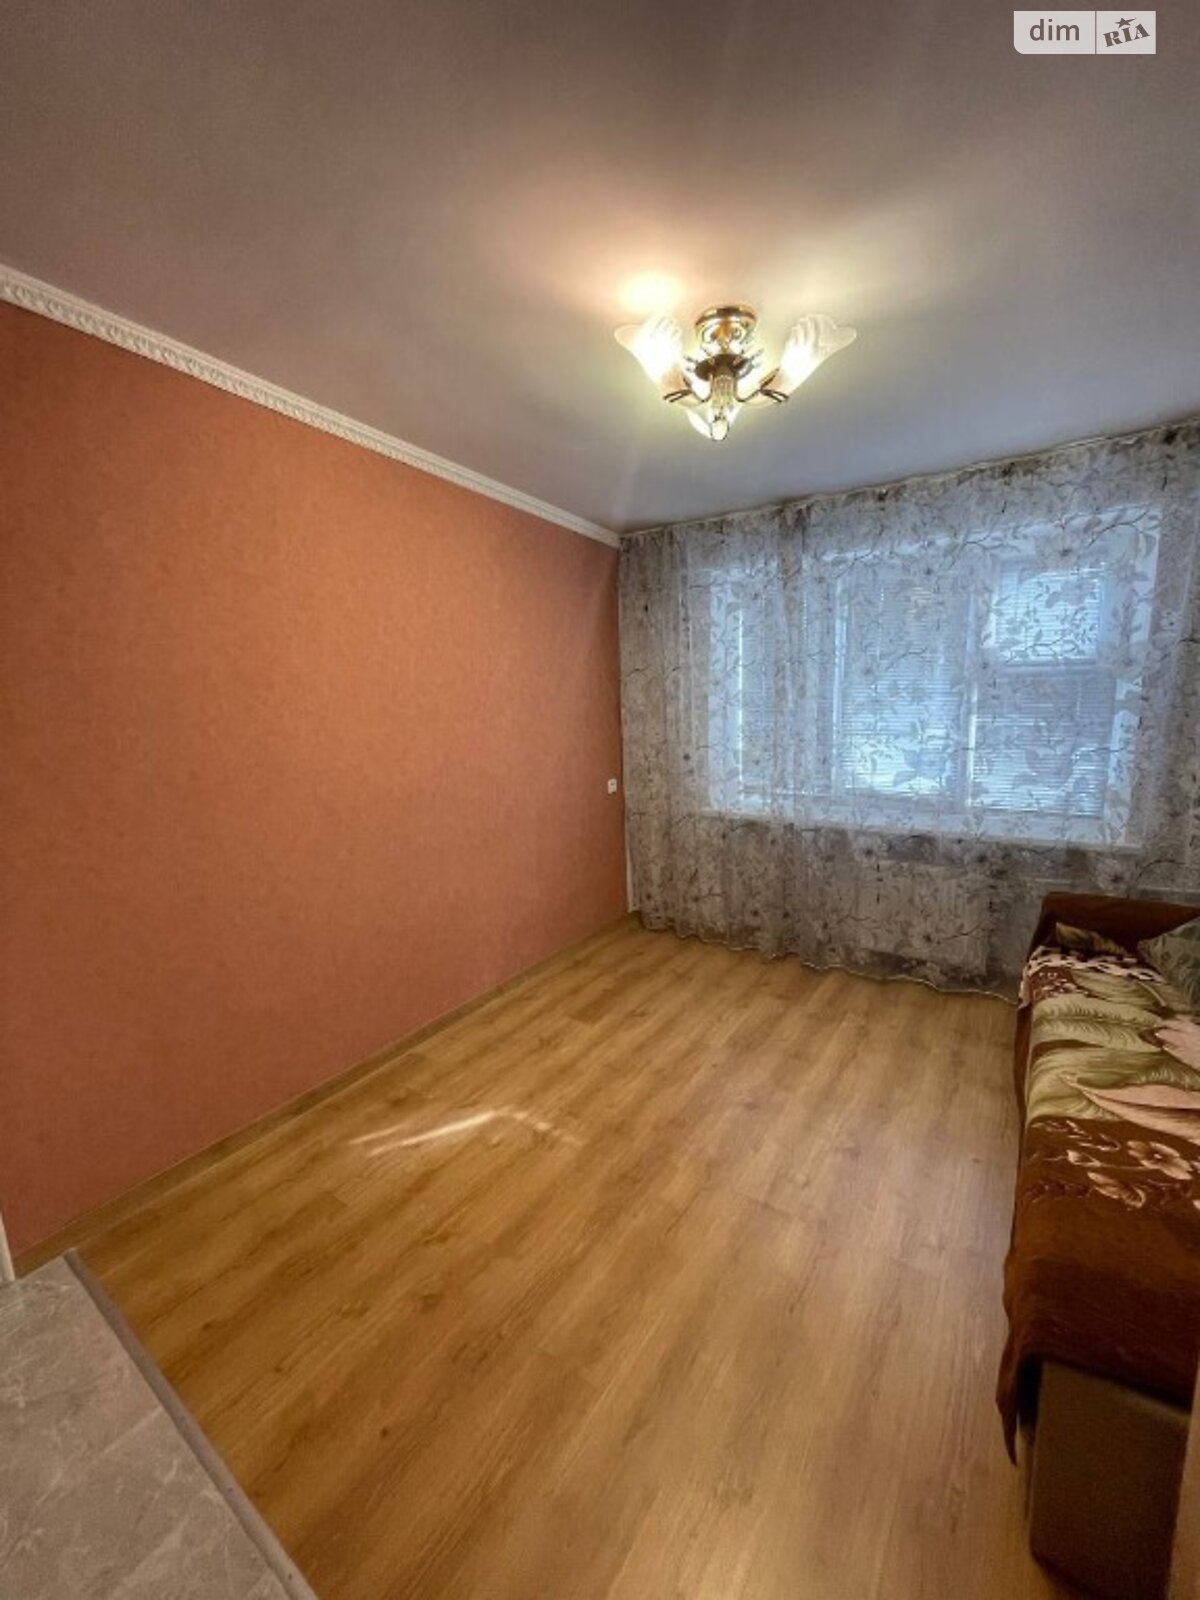 Комната в Броварах, на ул. Сергея Москаленко 2 в районе Торгмаш на продажу фото 1